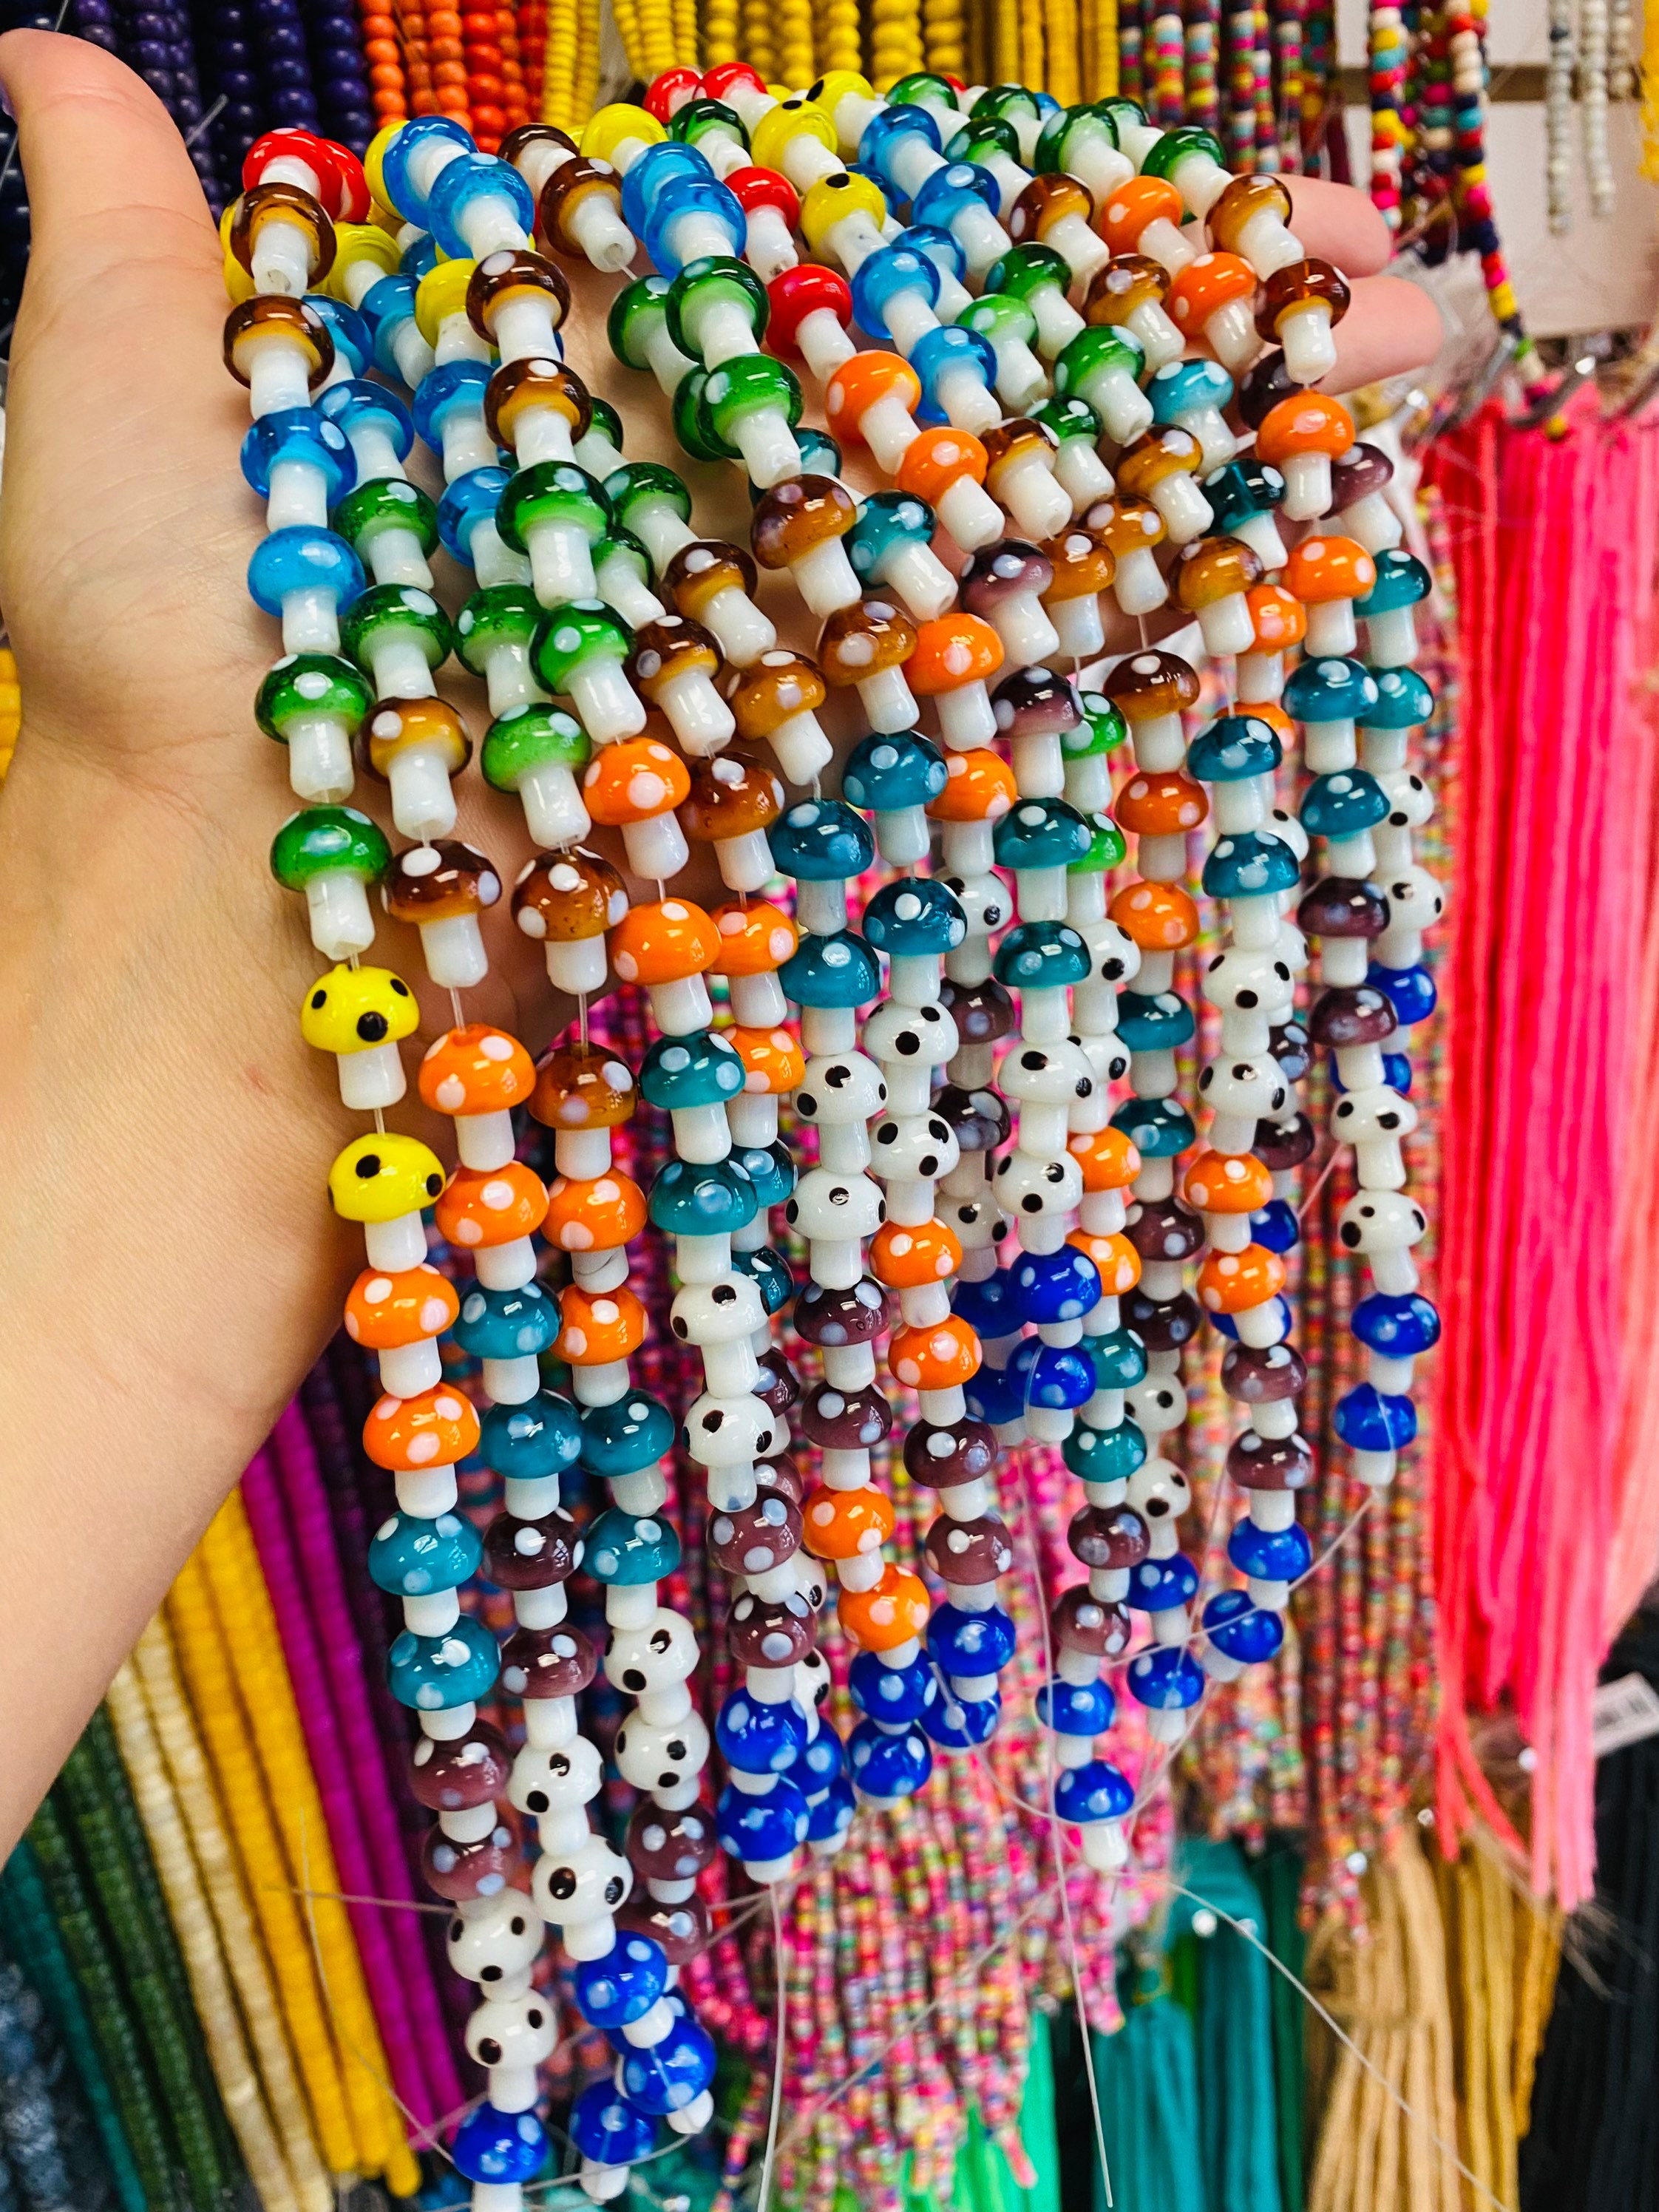 Strand of Colorful Mushroom Beads,shroom Pendant Beads,keychain Bright  Clear Mushroom Beads,mushroom Charms,boho Bead DIY Jewelry Making 